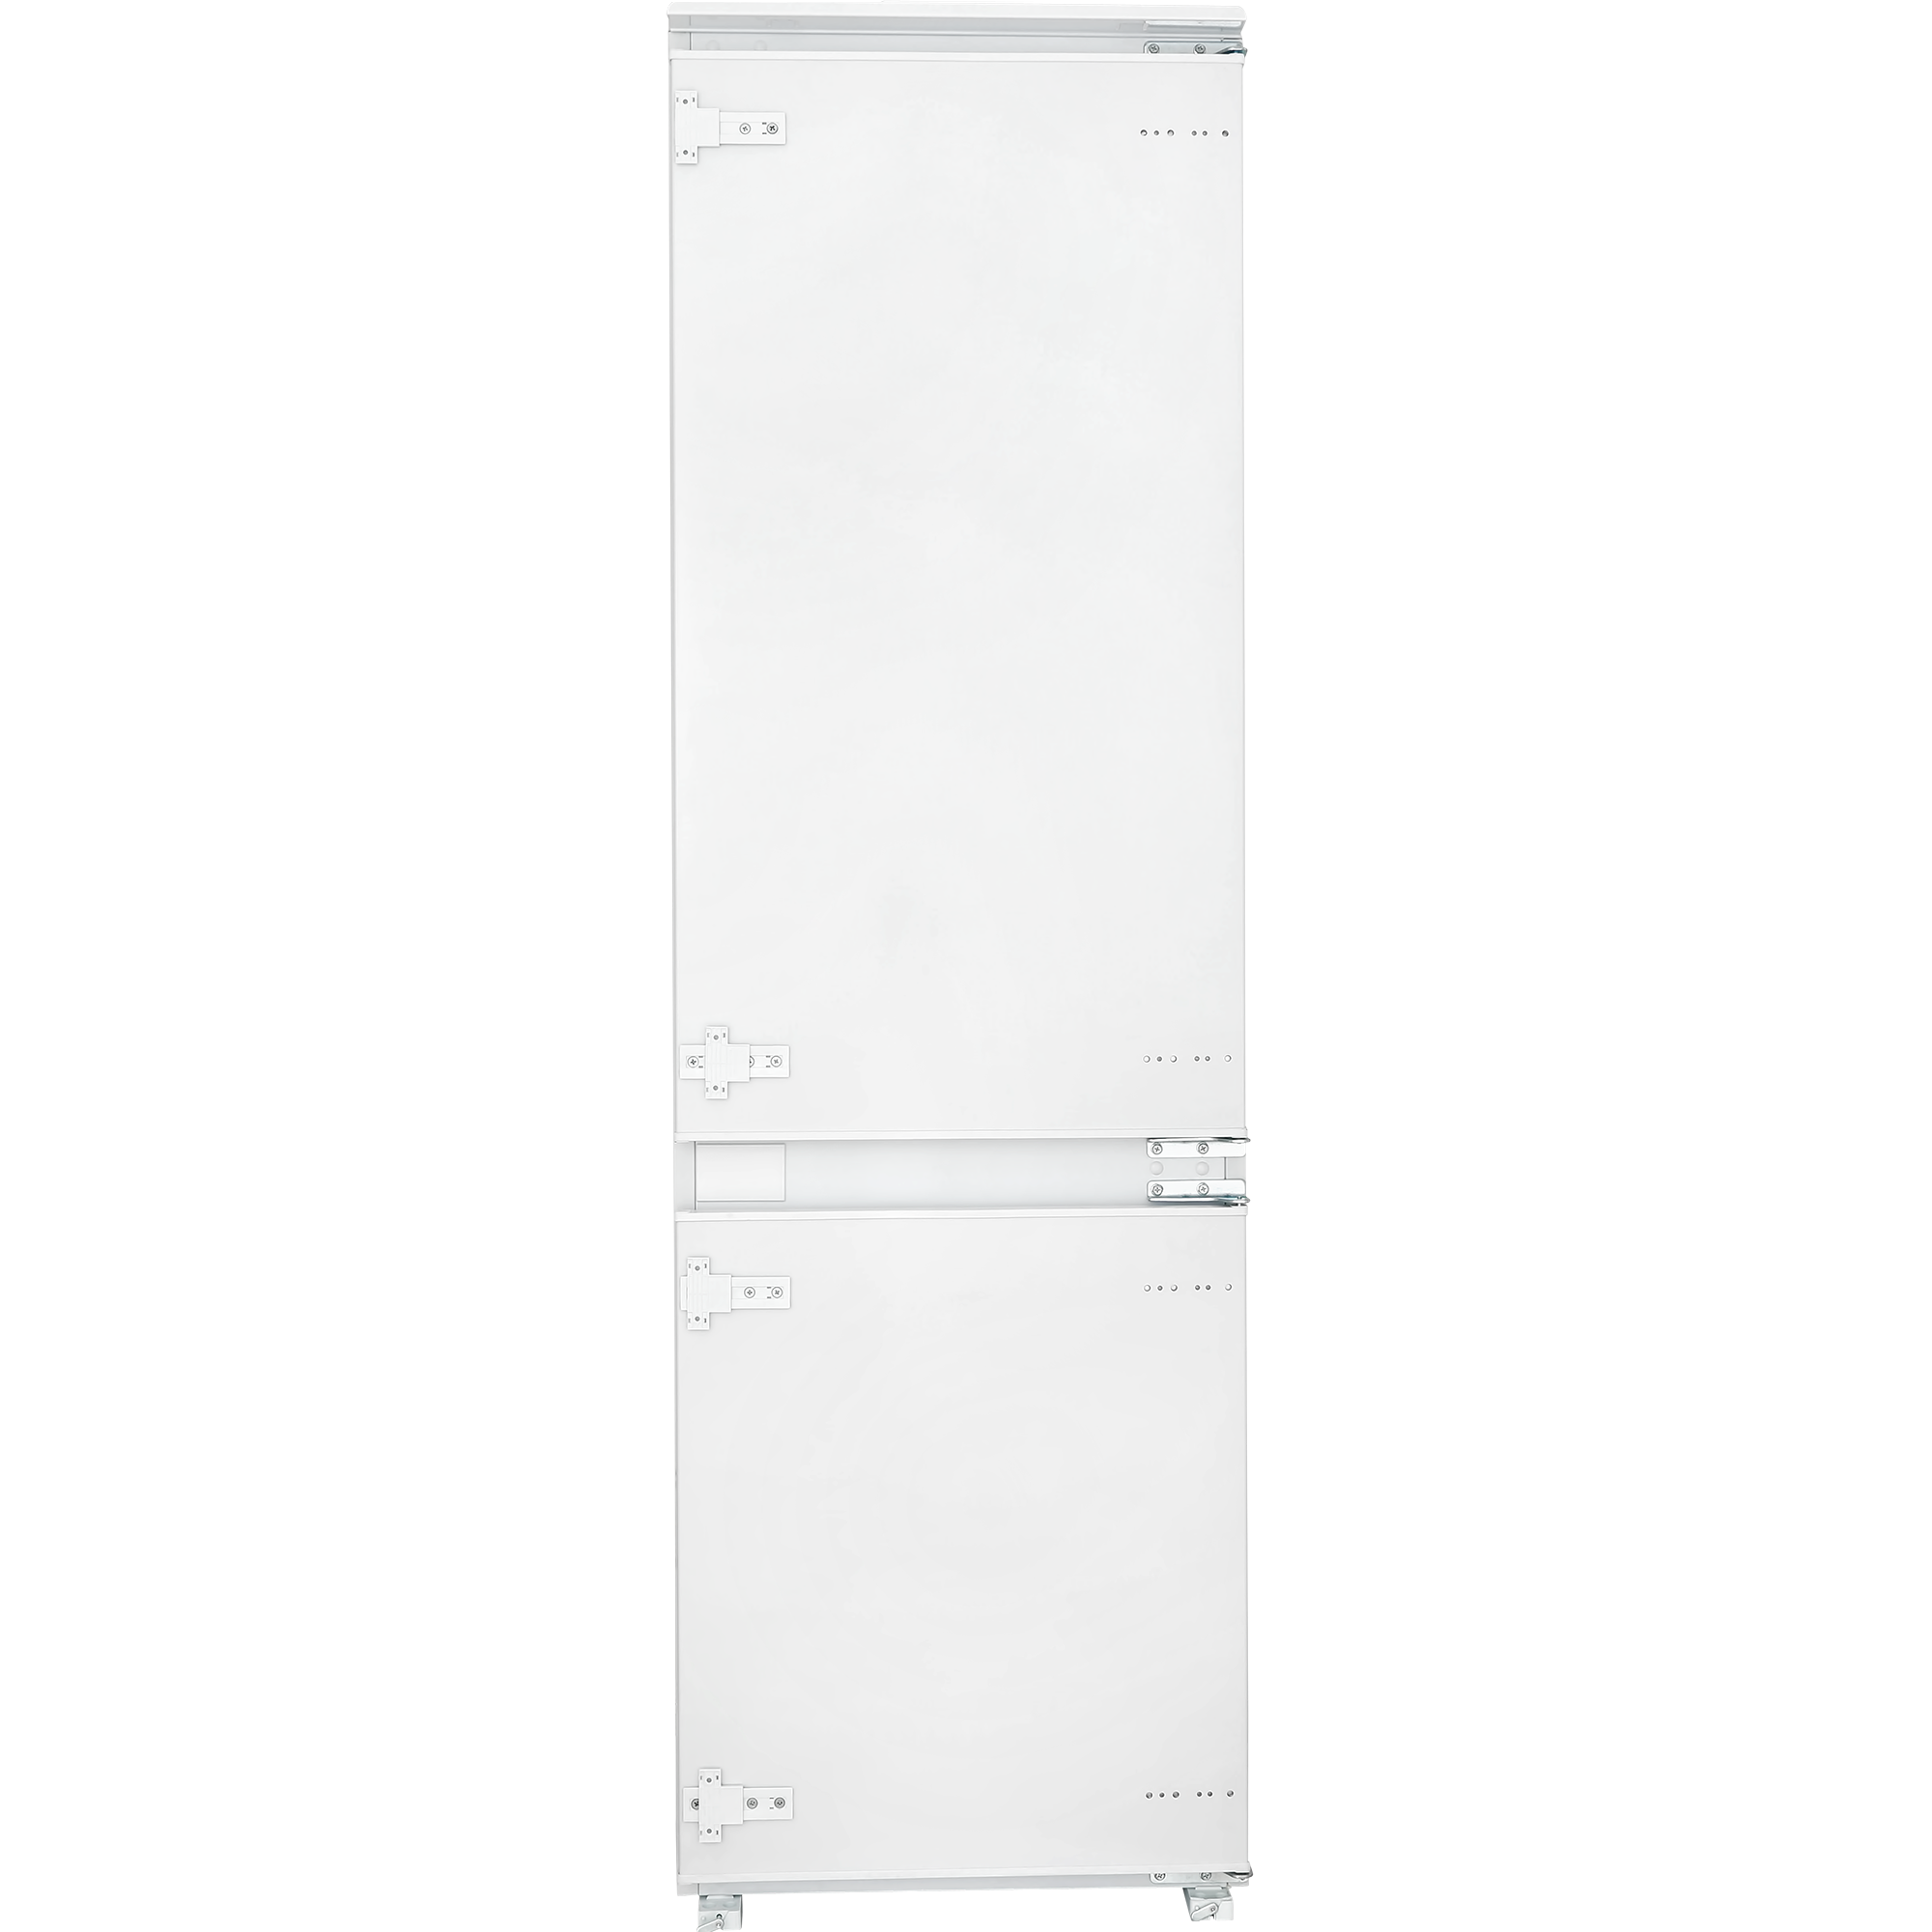 Встраиваемый холодильник HIBERG rfcb-350 NFW. Холодильник DEXP bib420ama. Хиберг RF 400 NFW. Параметры холодильника DEXP Fresh Bib 420 ama. Dexp fresh bib420ama